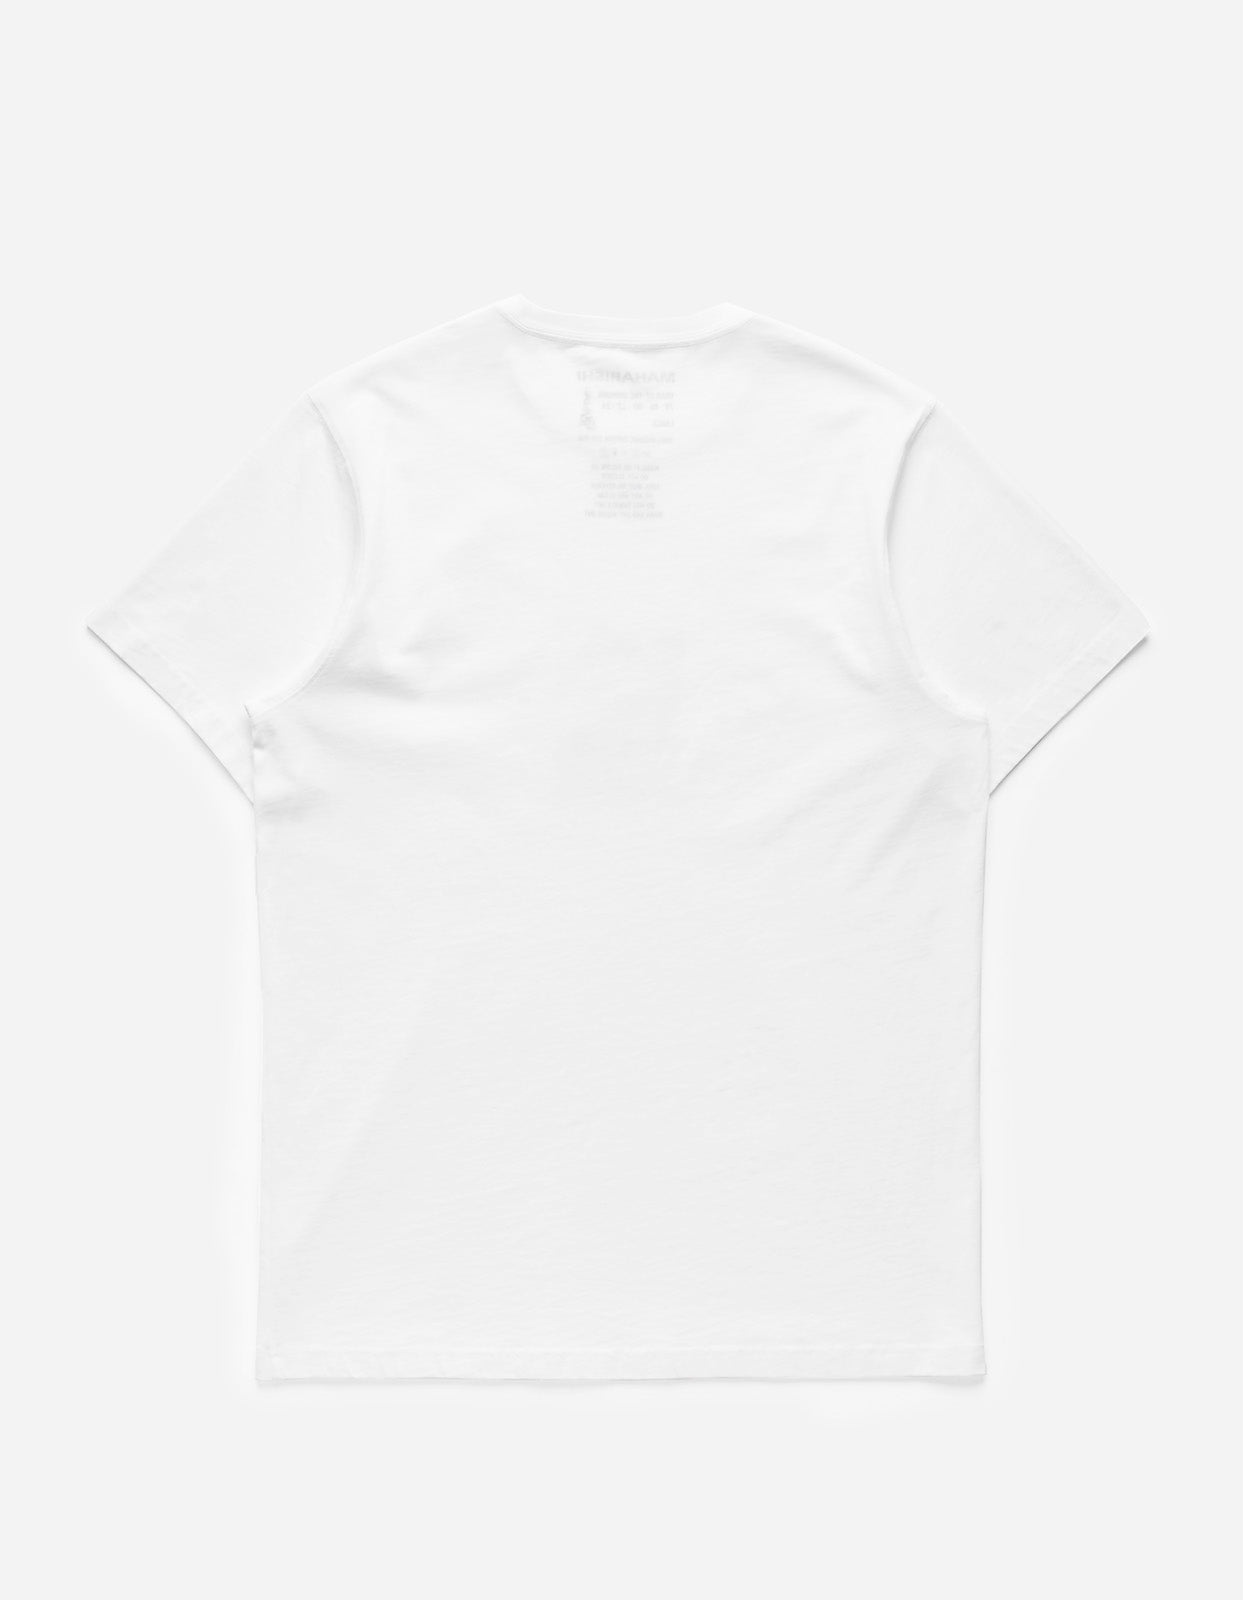 1296 Tiger Fur Calligraphy T-Shirt White